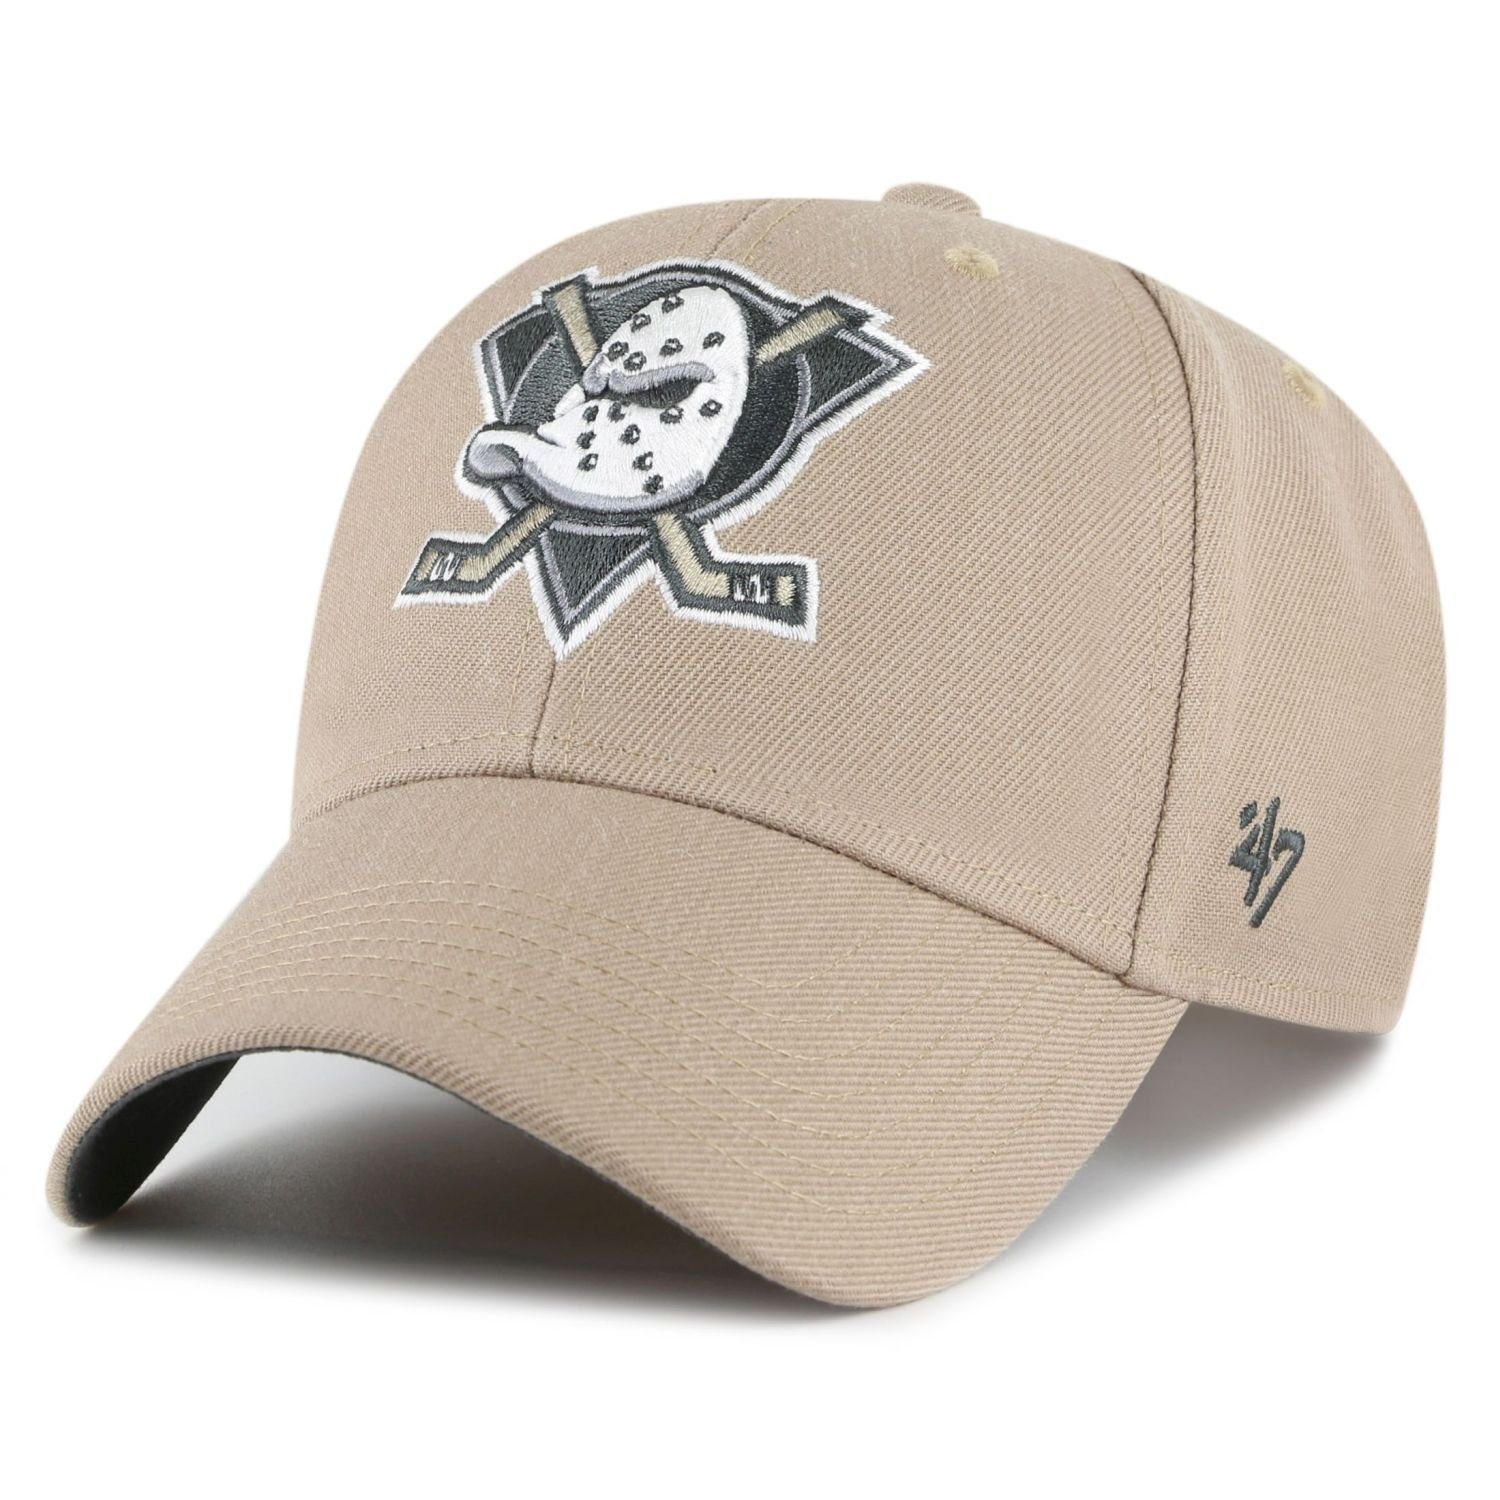 Anaheim Snapback NHL '47 Curved Brand Ducks Cap